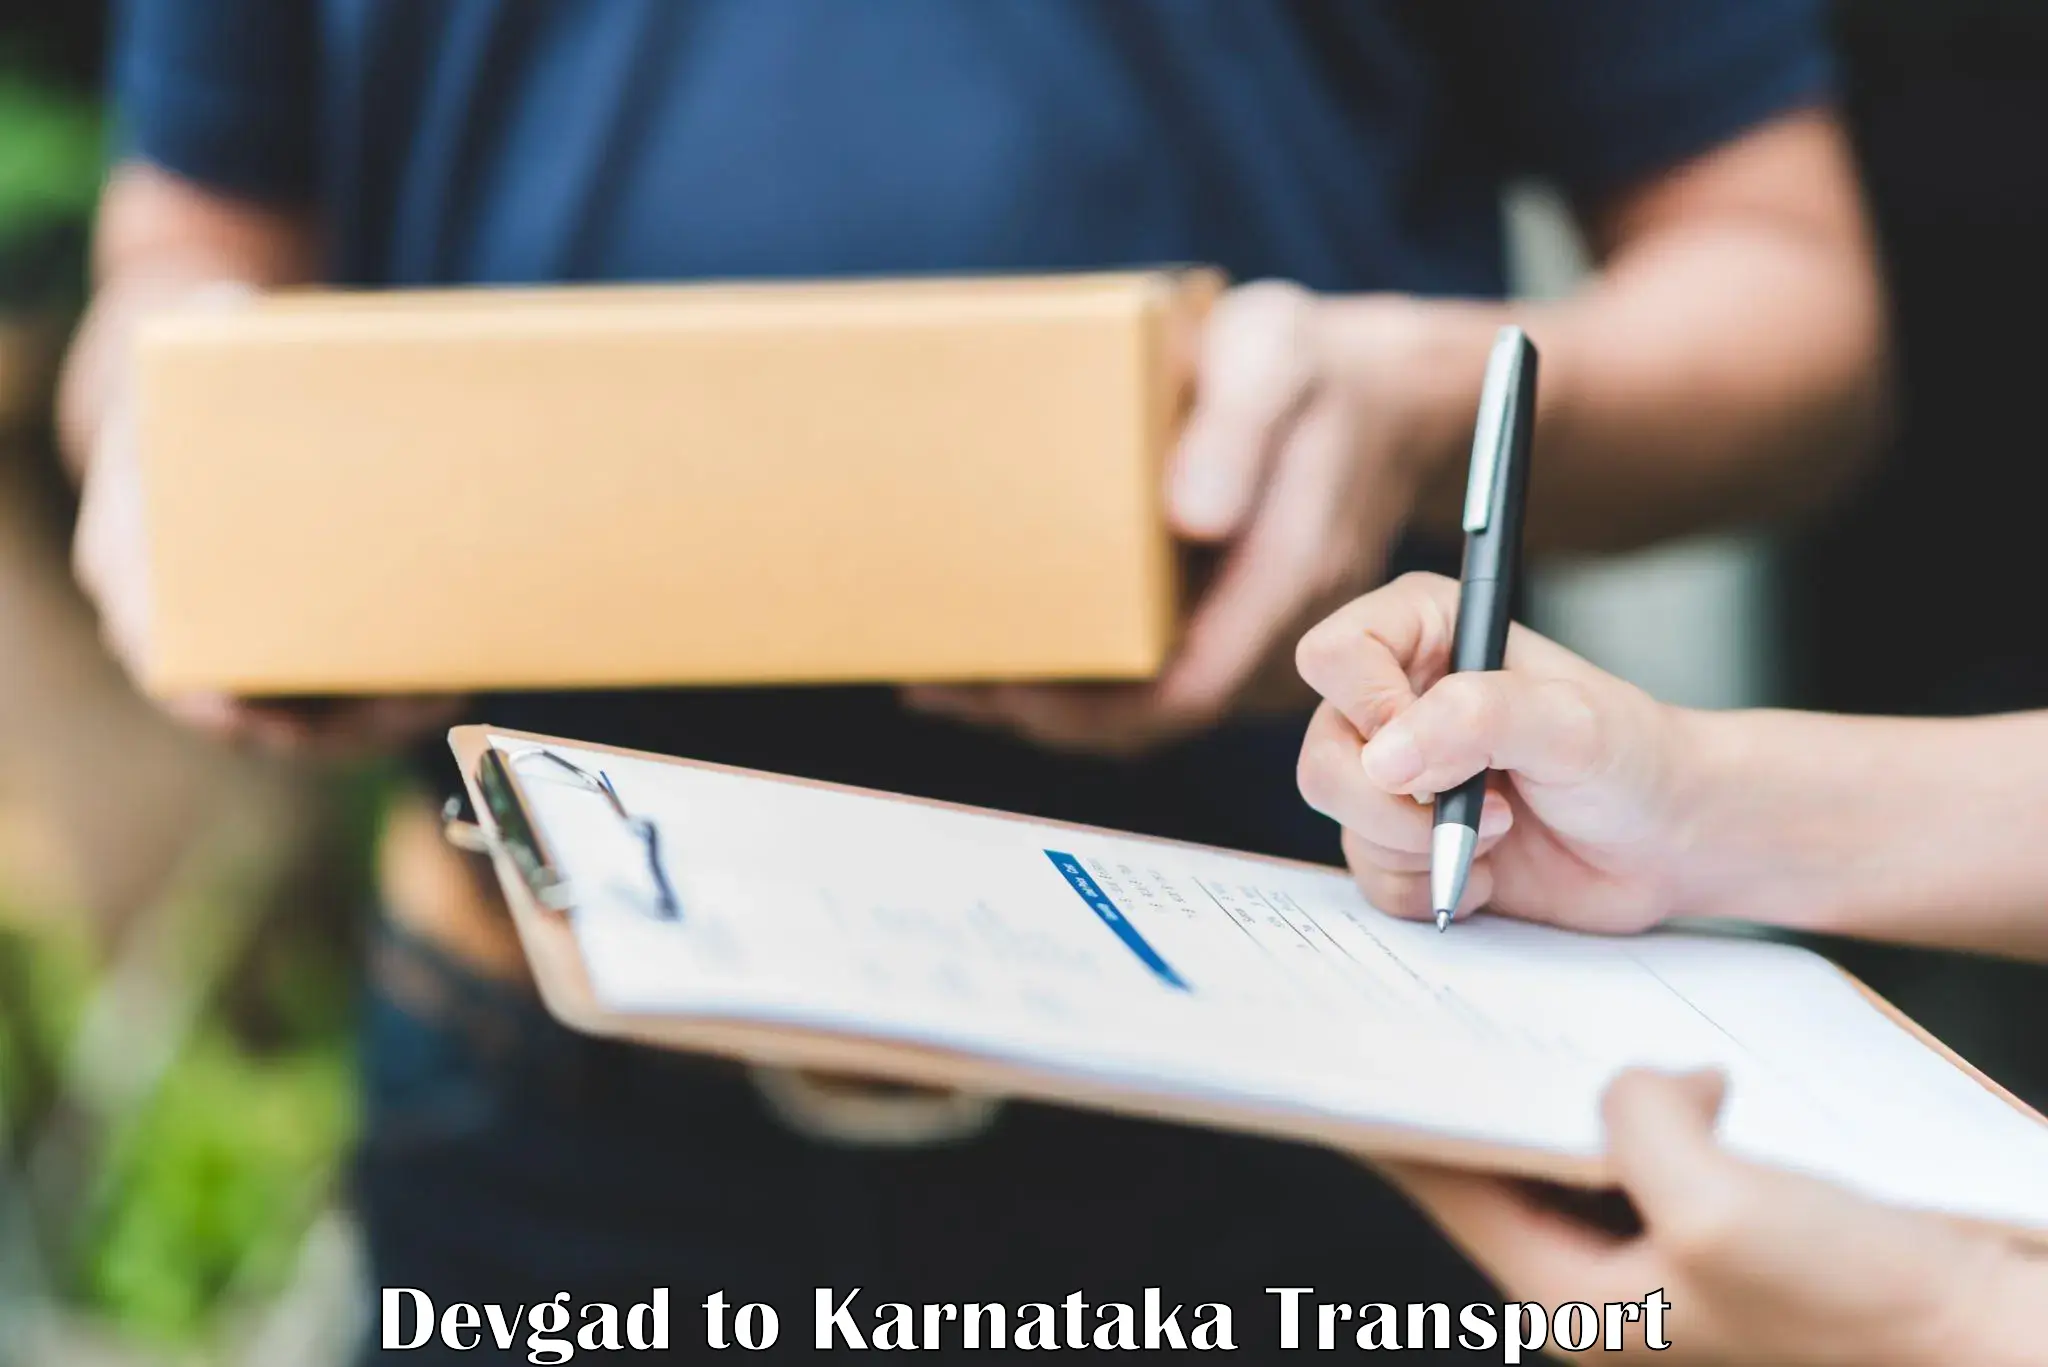 Transport in sharing Devgad to Saraswathipuram